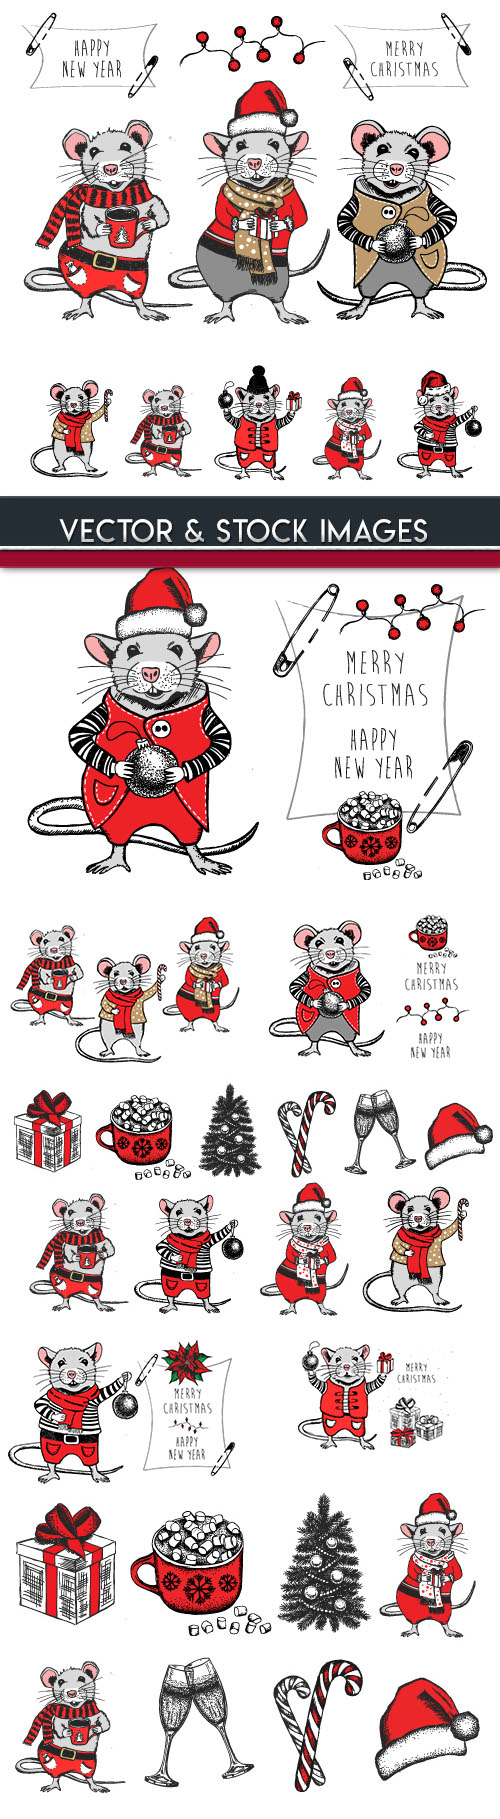 Rat cartoon symbol of New Year 2020 illustration 8